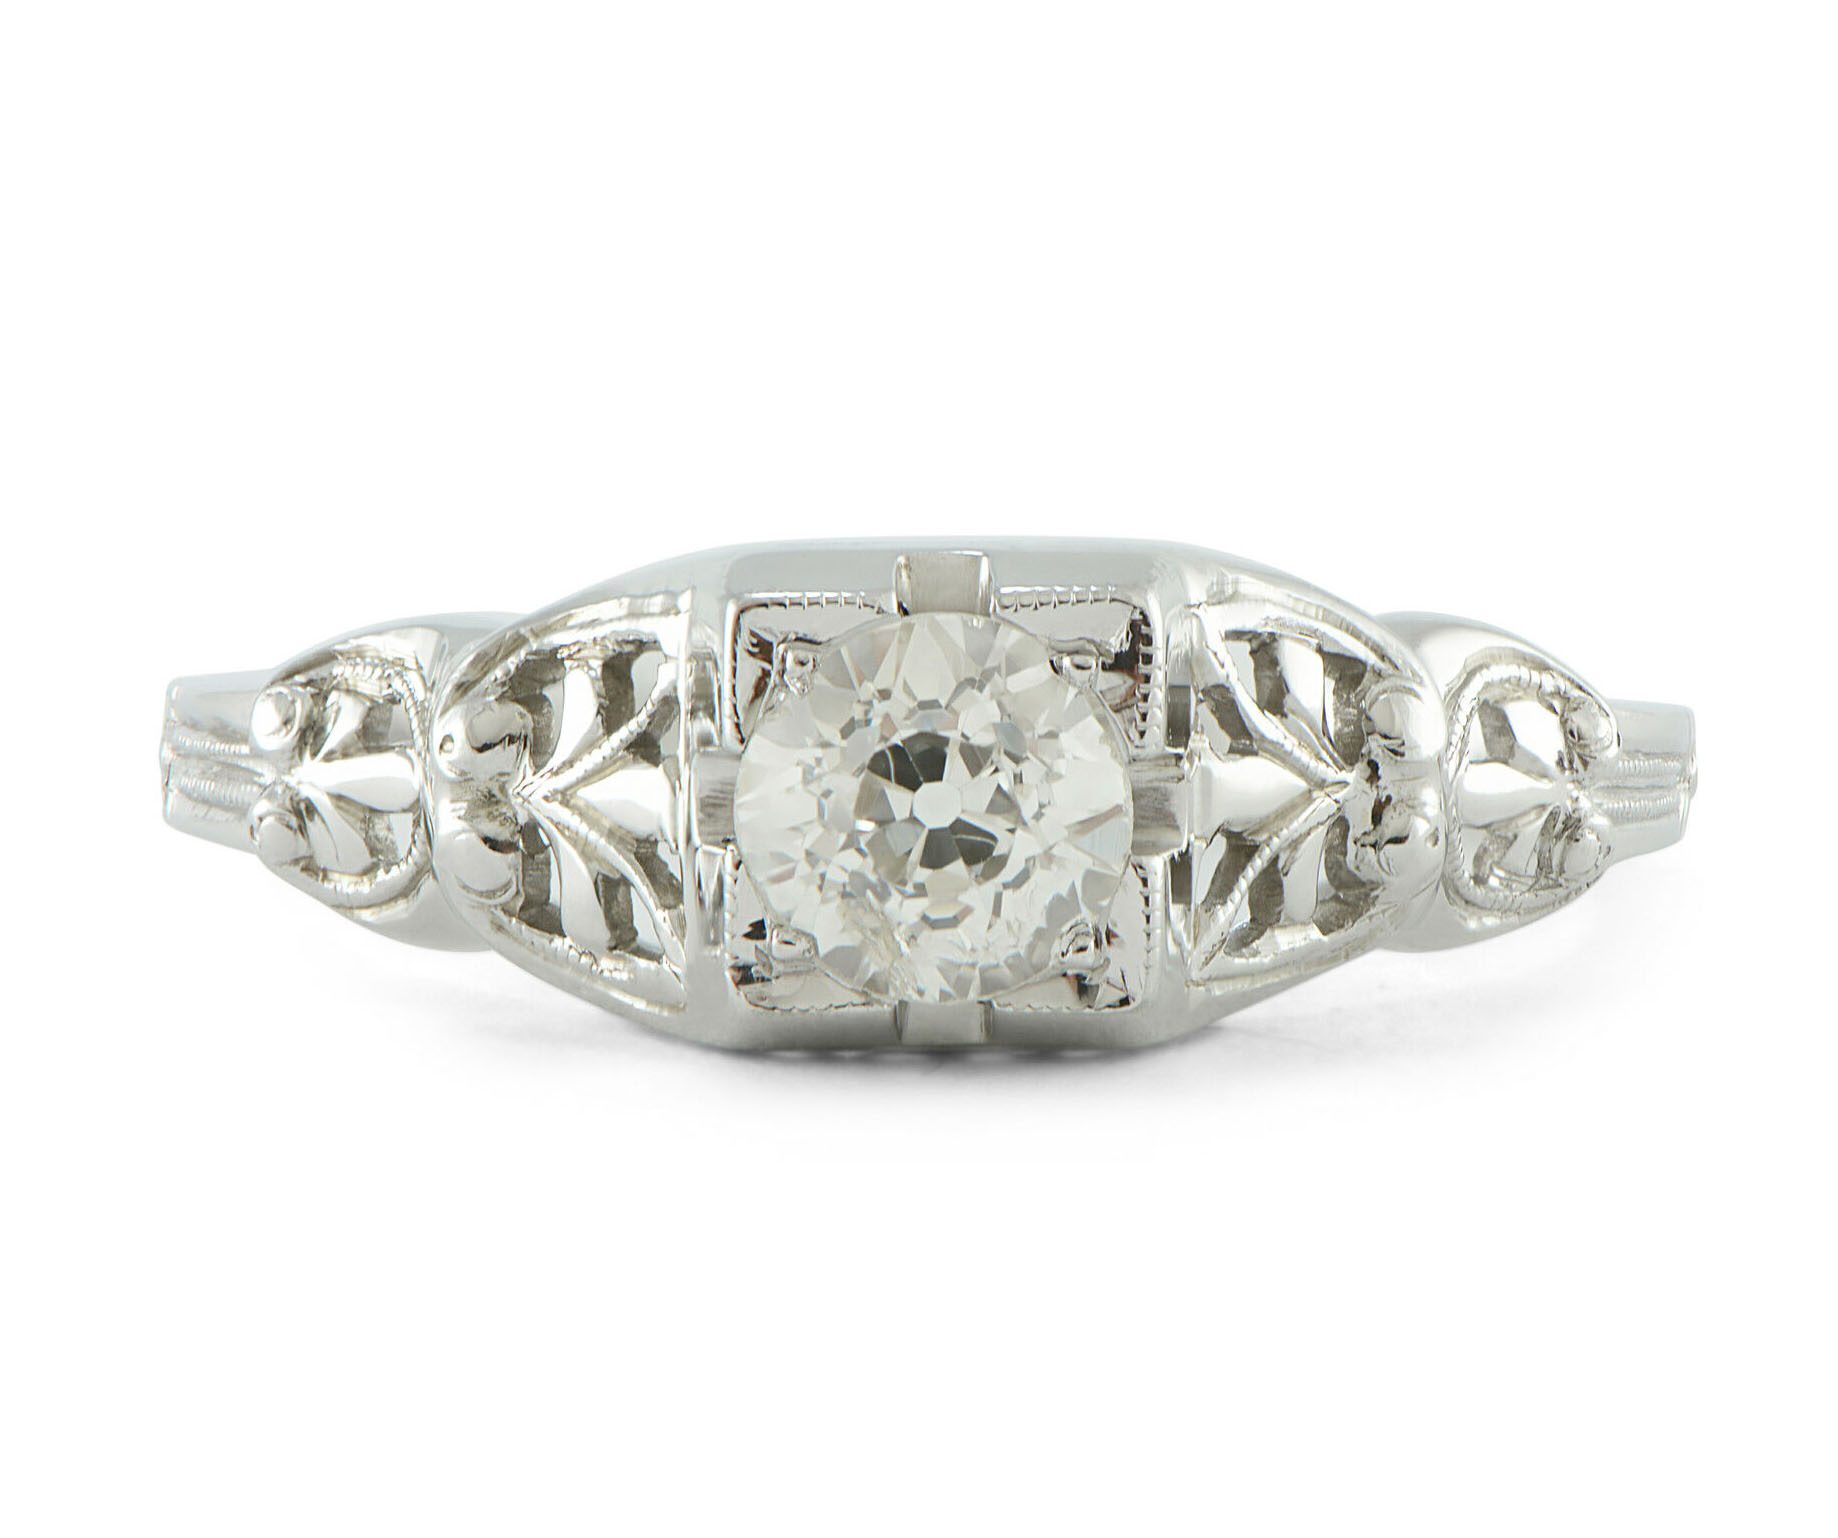 Antique-Round-Diamond-Engagement-Ring-18k-White-Gold-50ct-TW-II1-Size-7-172745558323